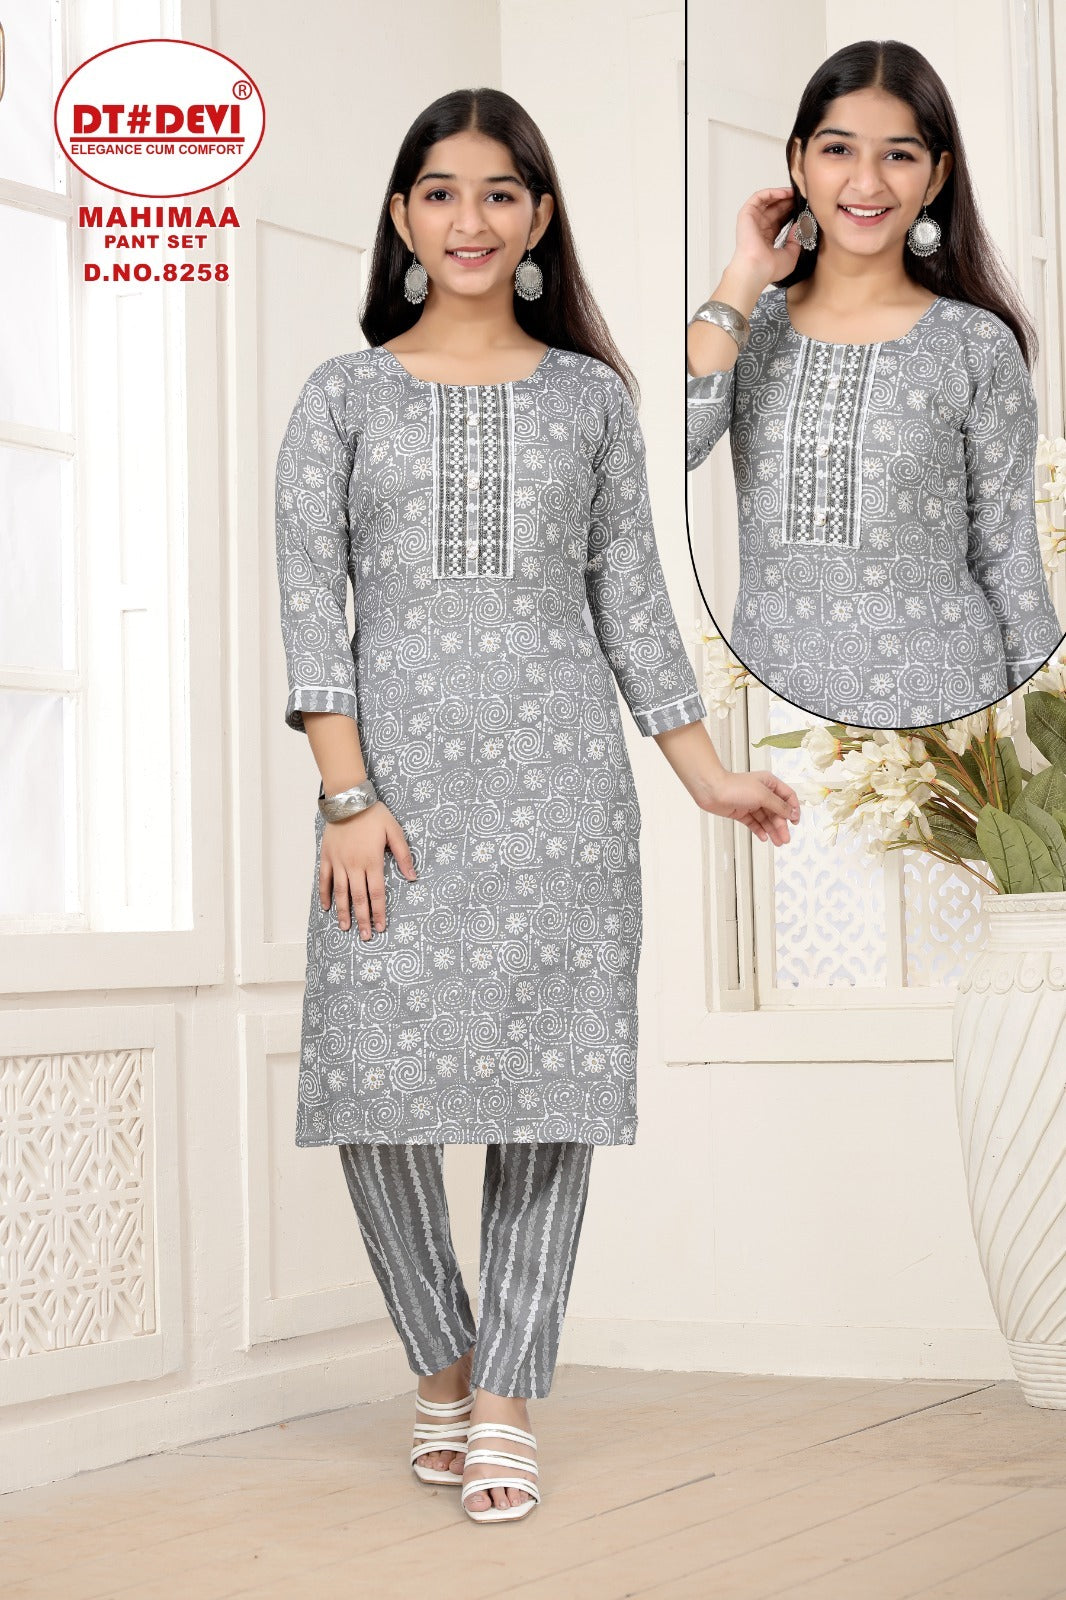 Mahimaa-8258 Dt Devi Cotton Co Ord Set